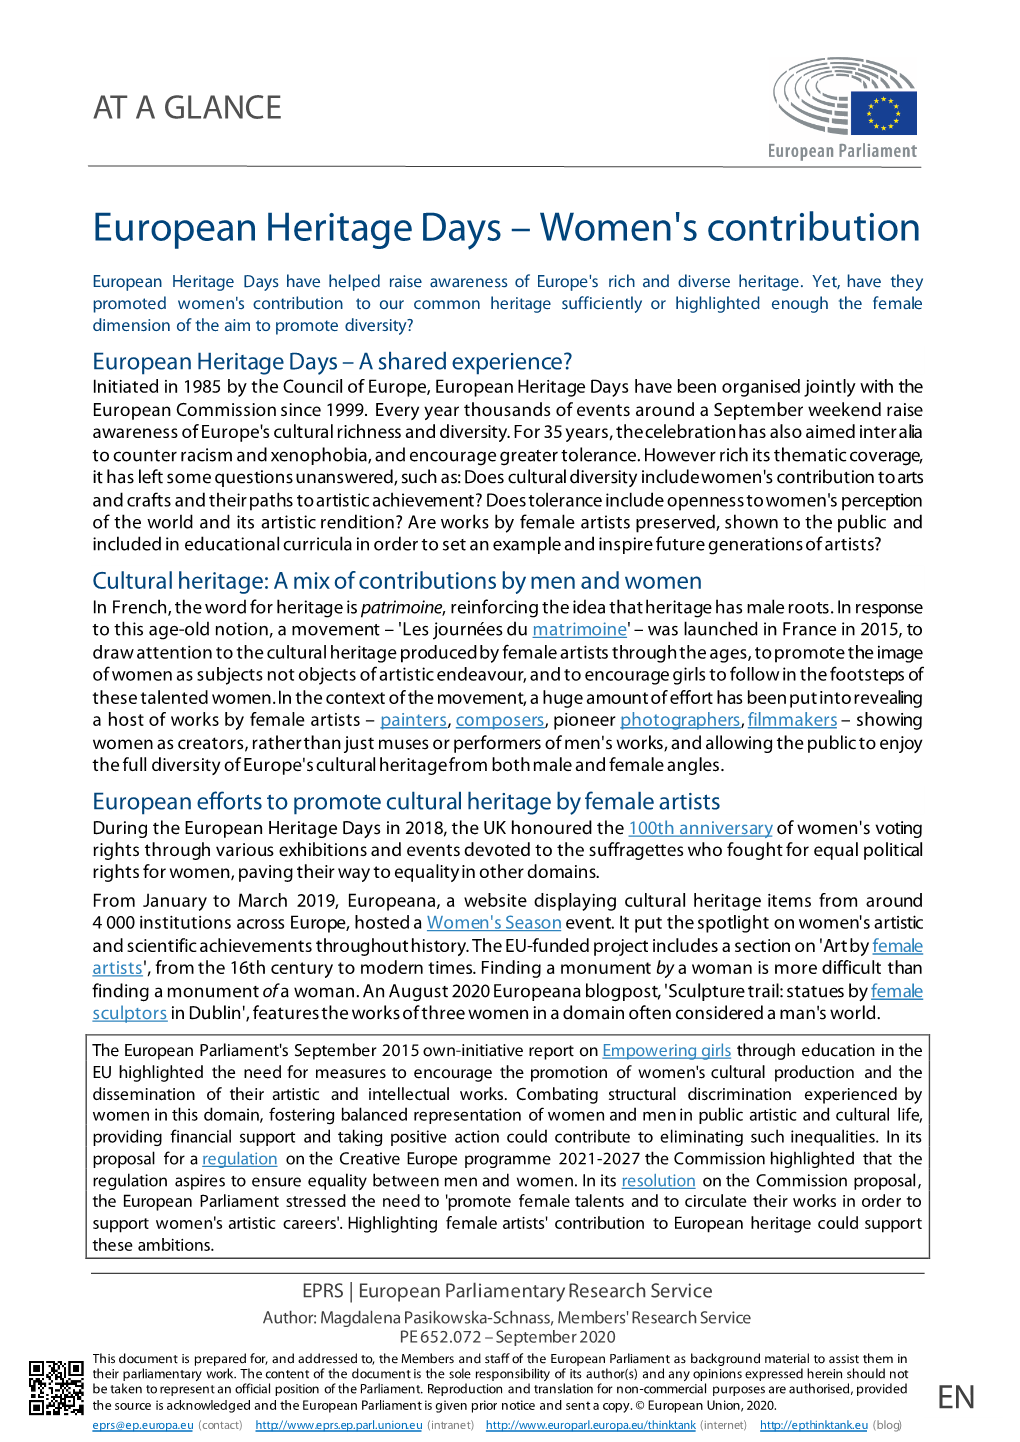 European Heritage Days – Women's Contribution